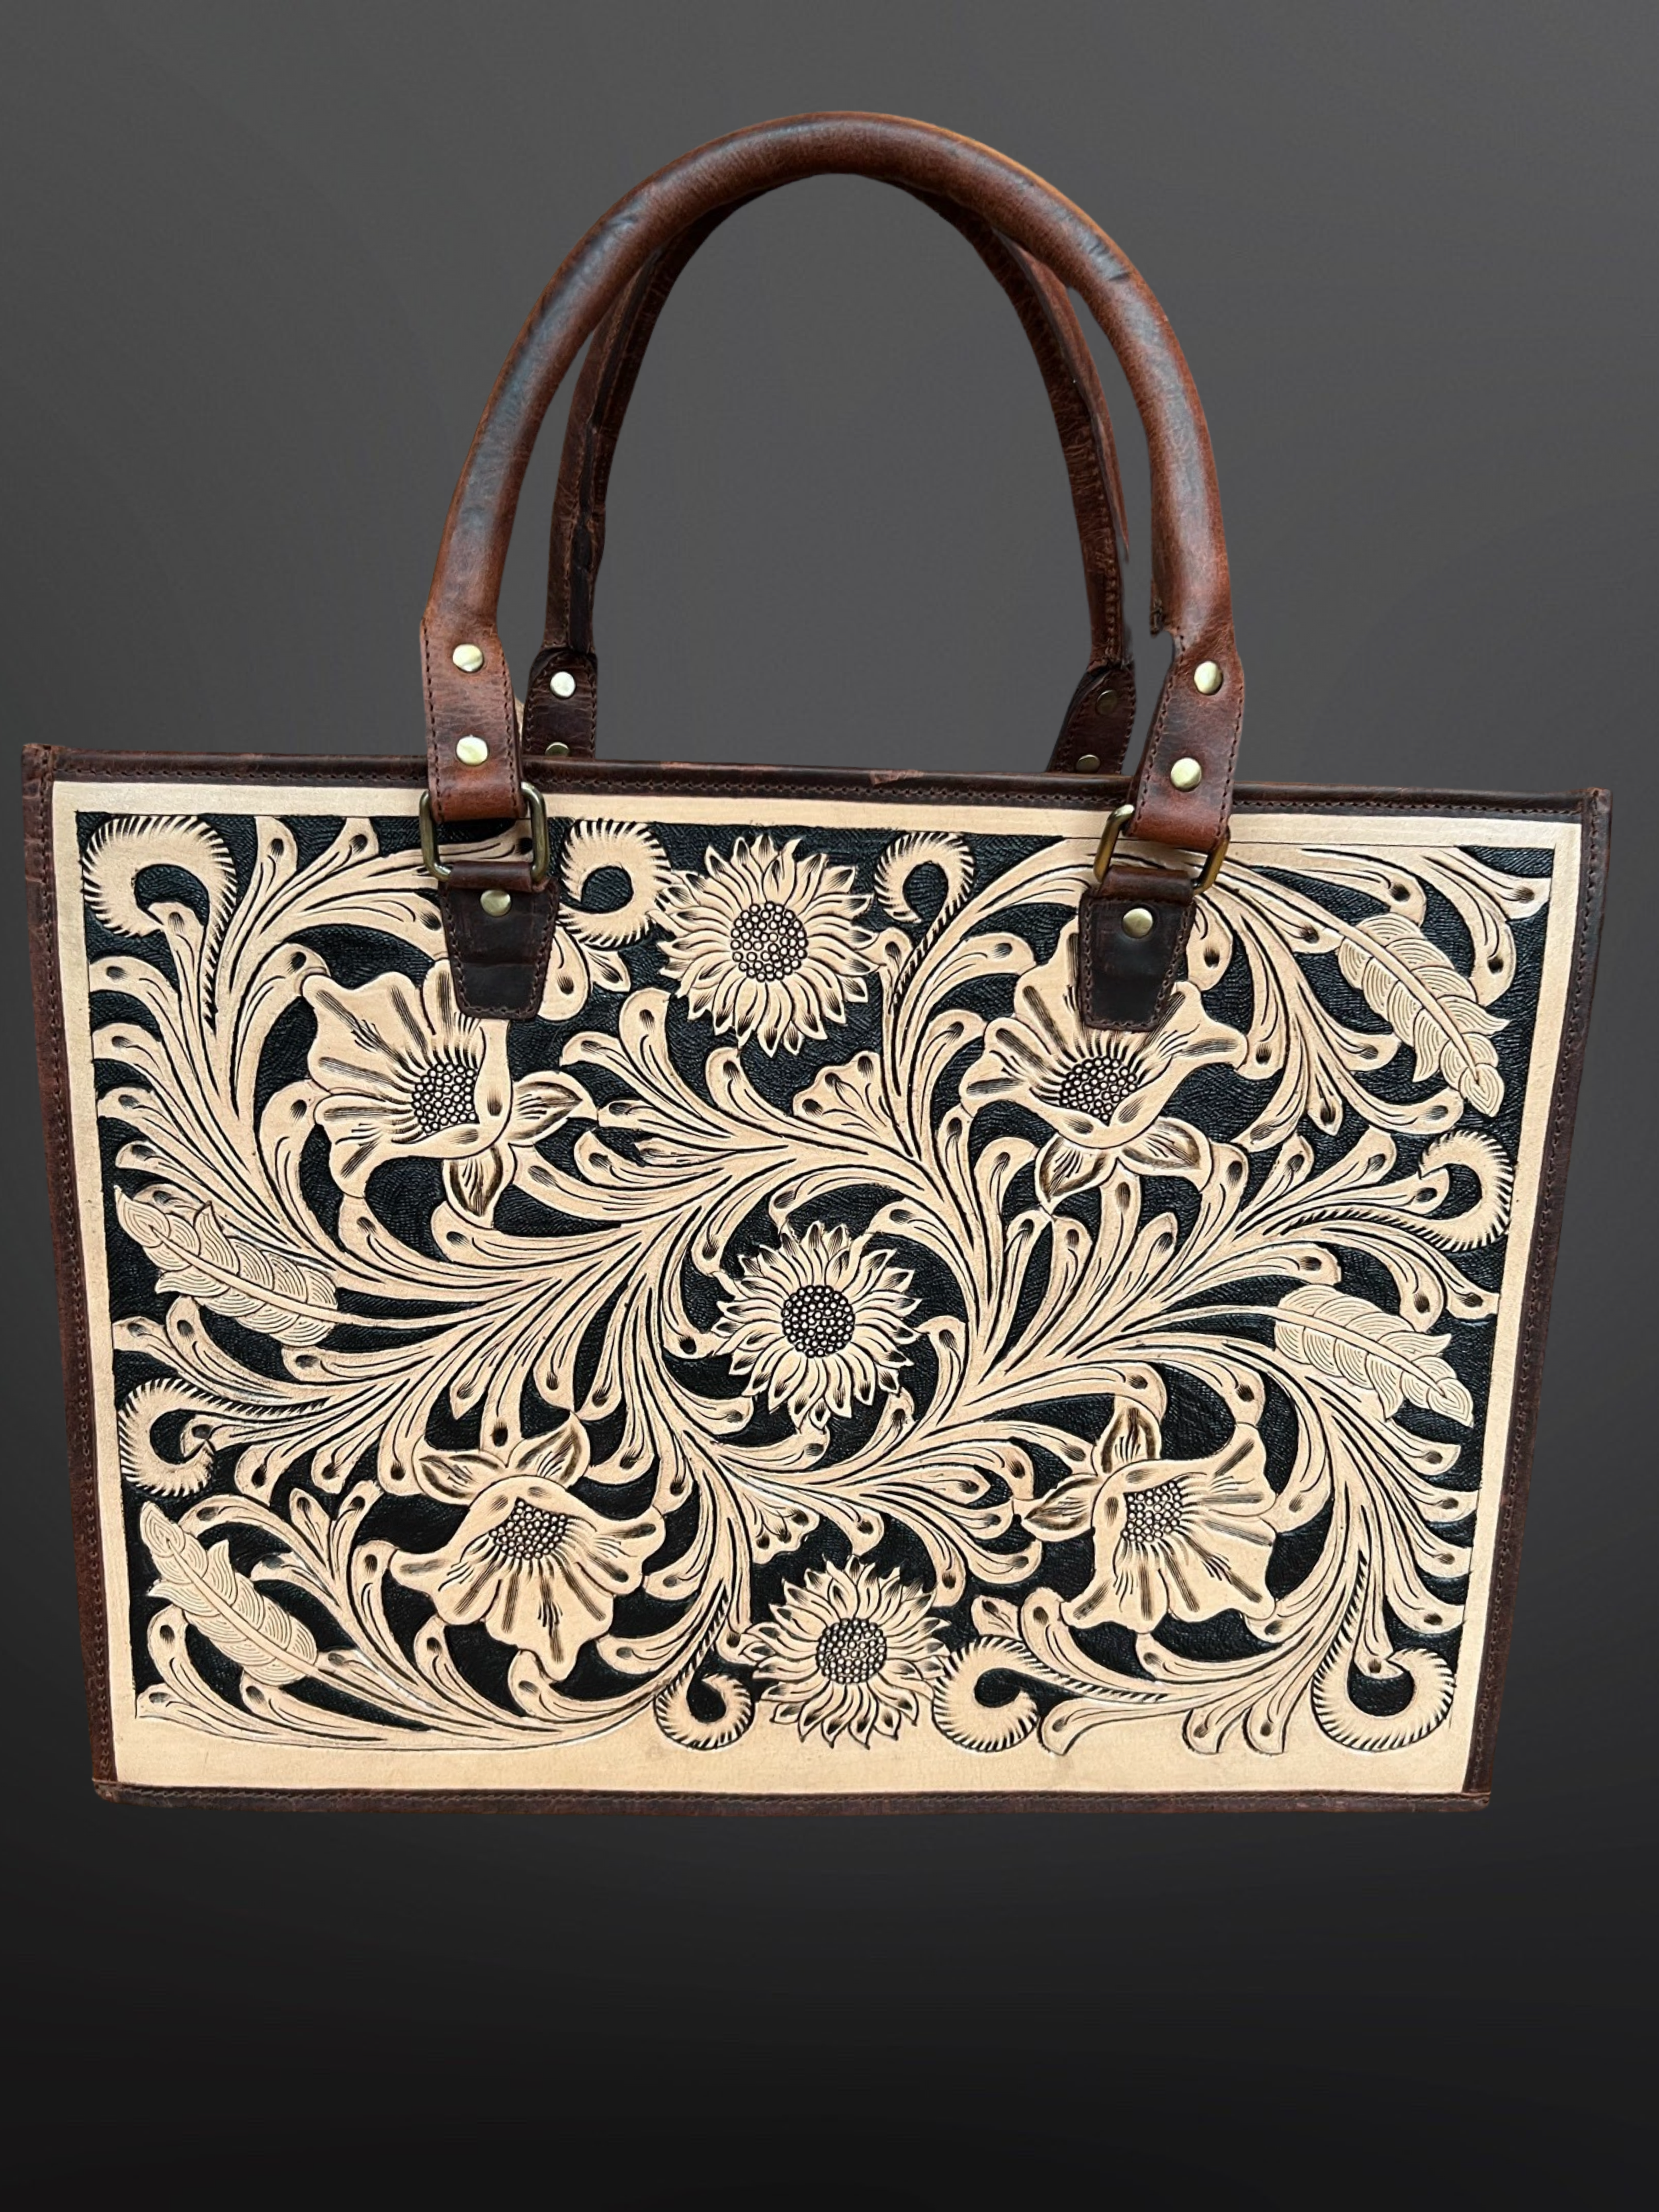 OGIO Handbags | Mercari